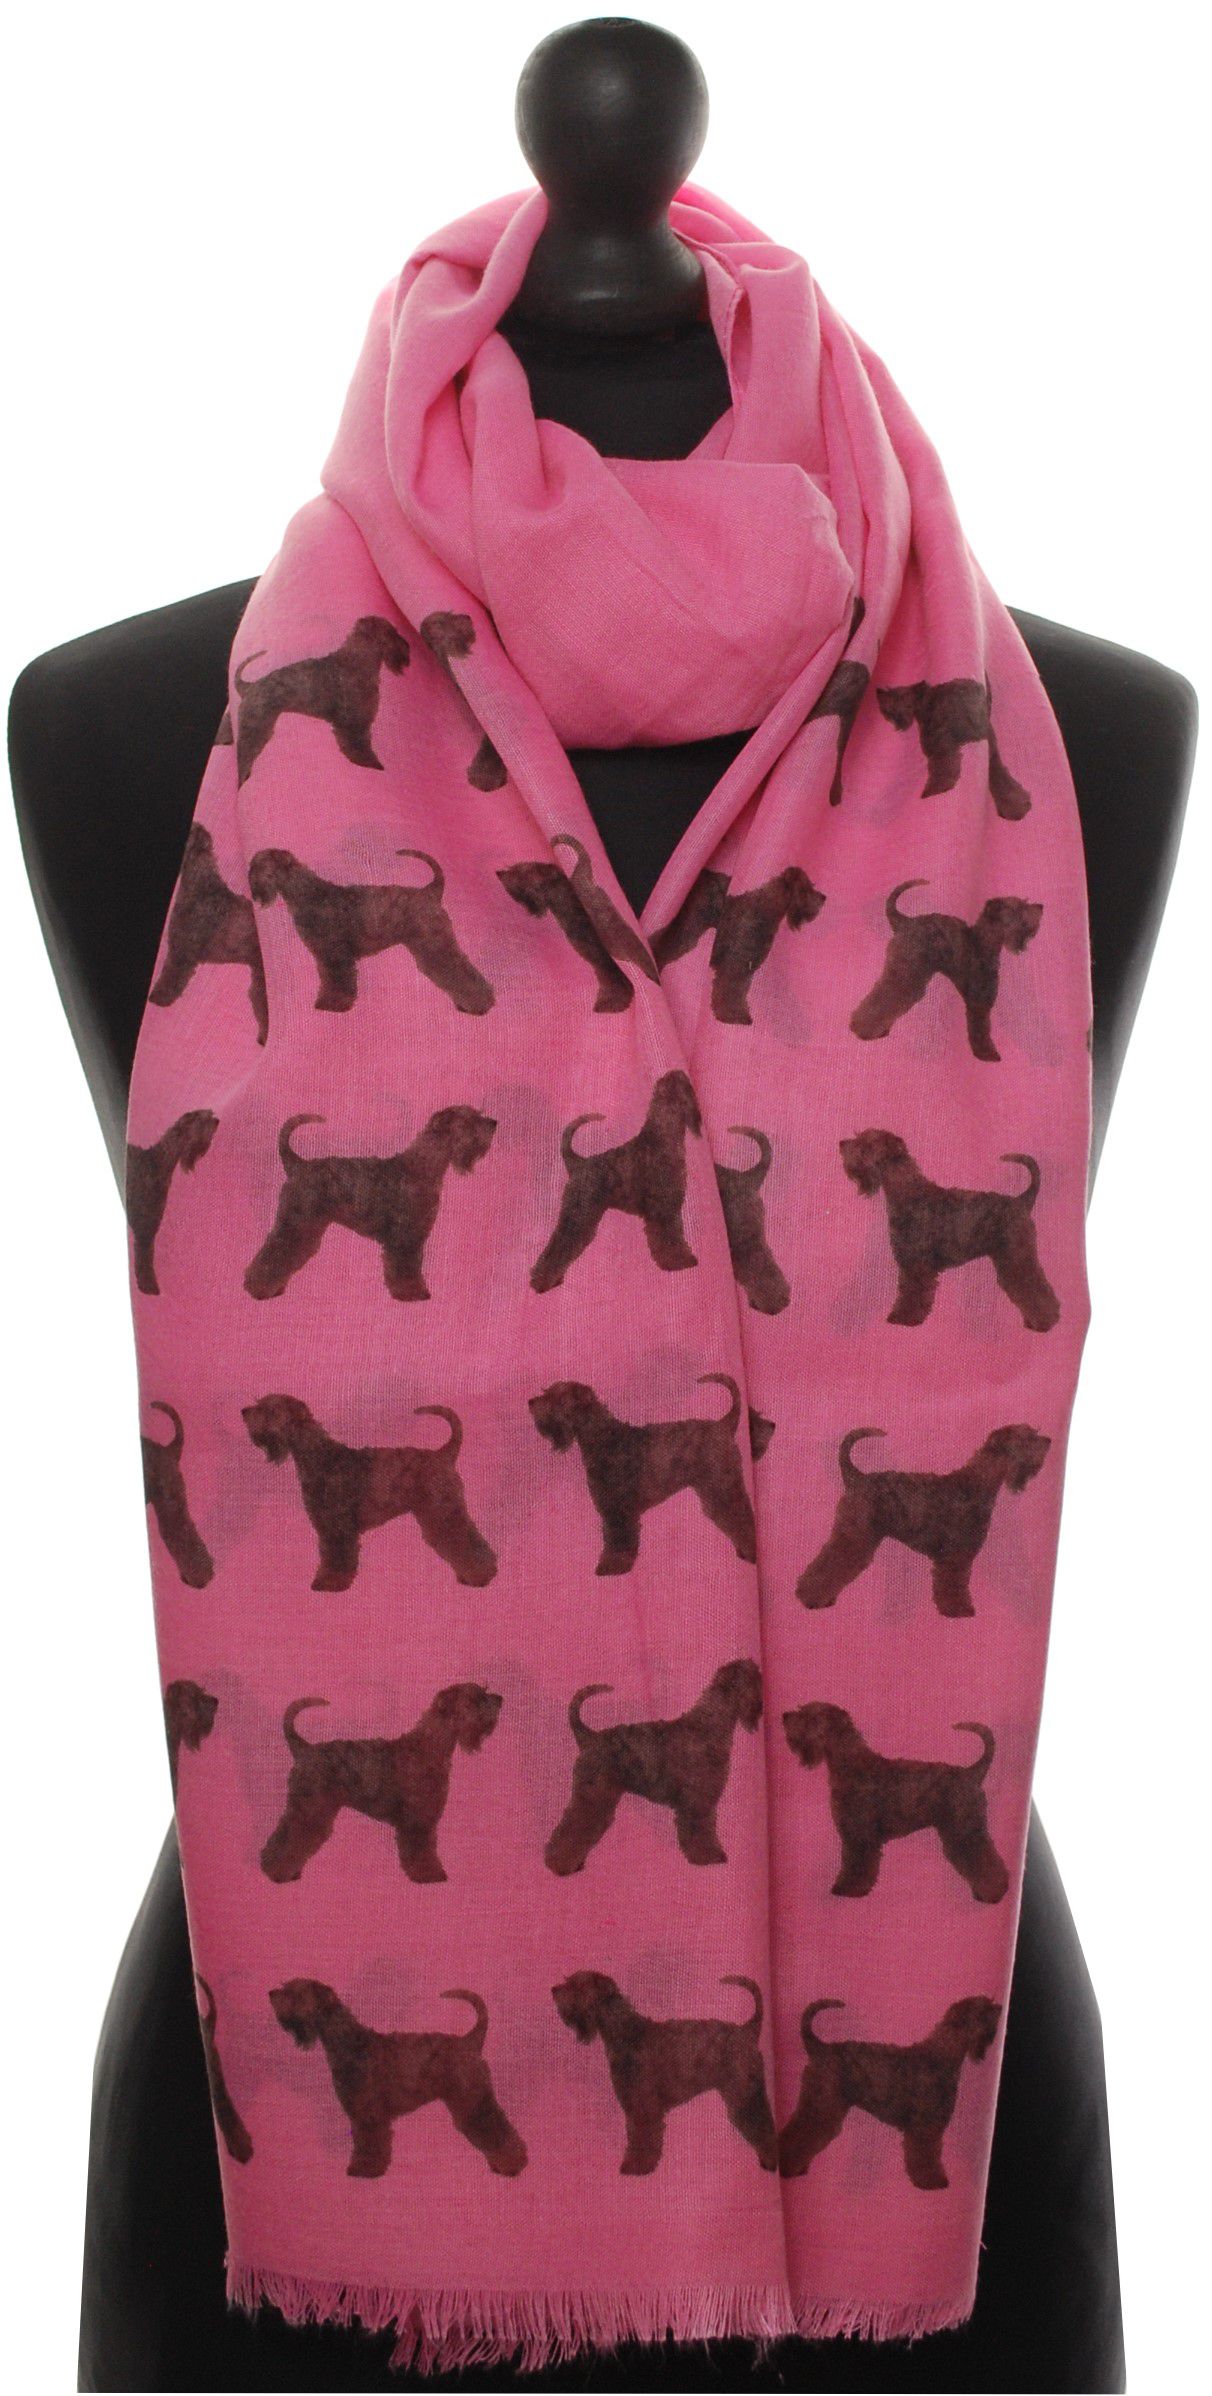 Wheaten Terrier hand printed ladies fashion scarf